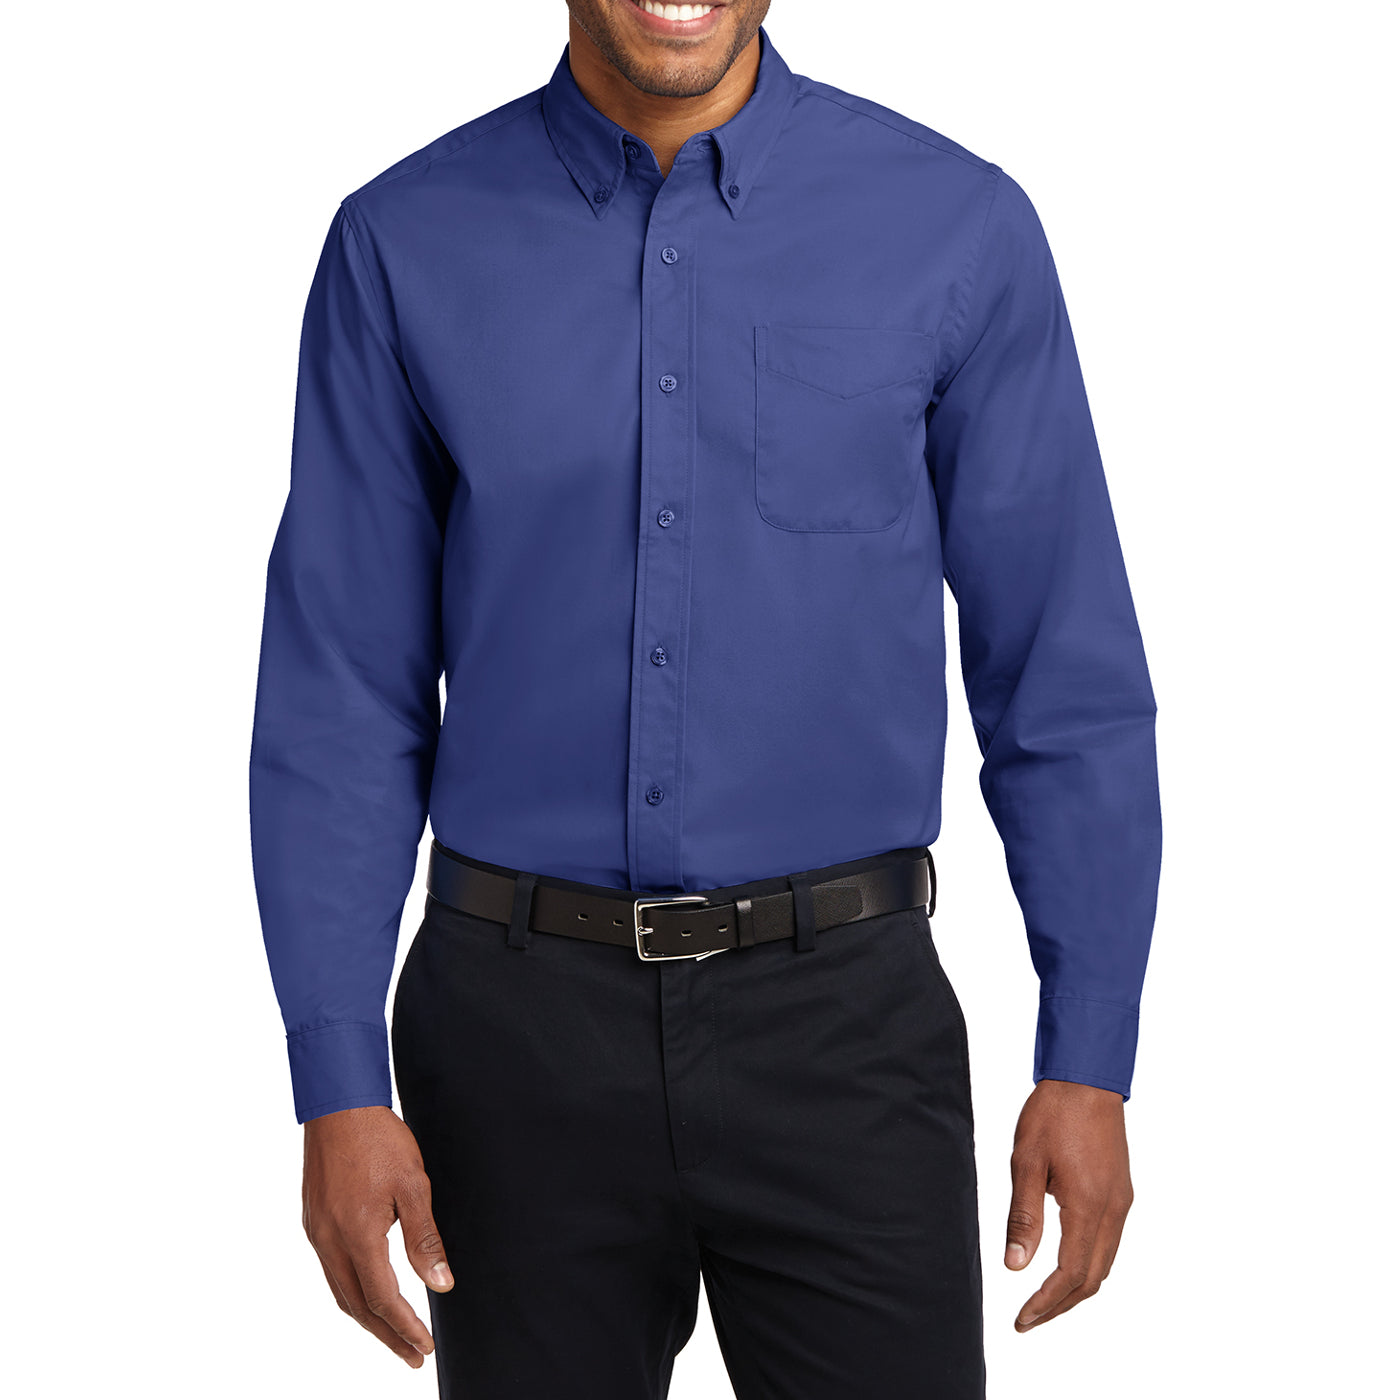 Men's Long Sleeve Easy Care Shirt - Mediterranean Blue - Front